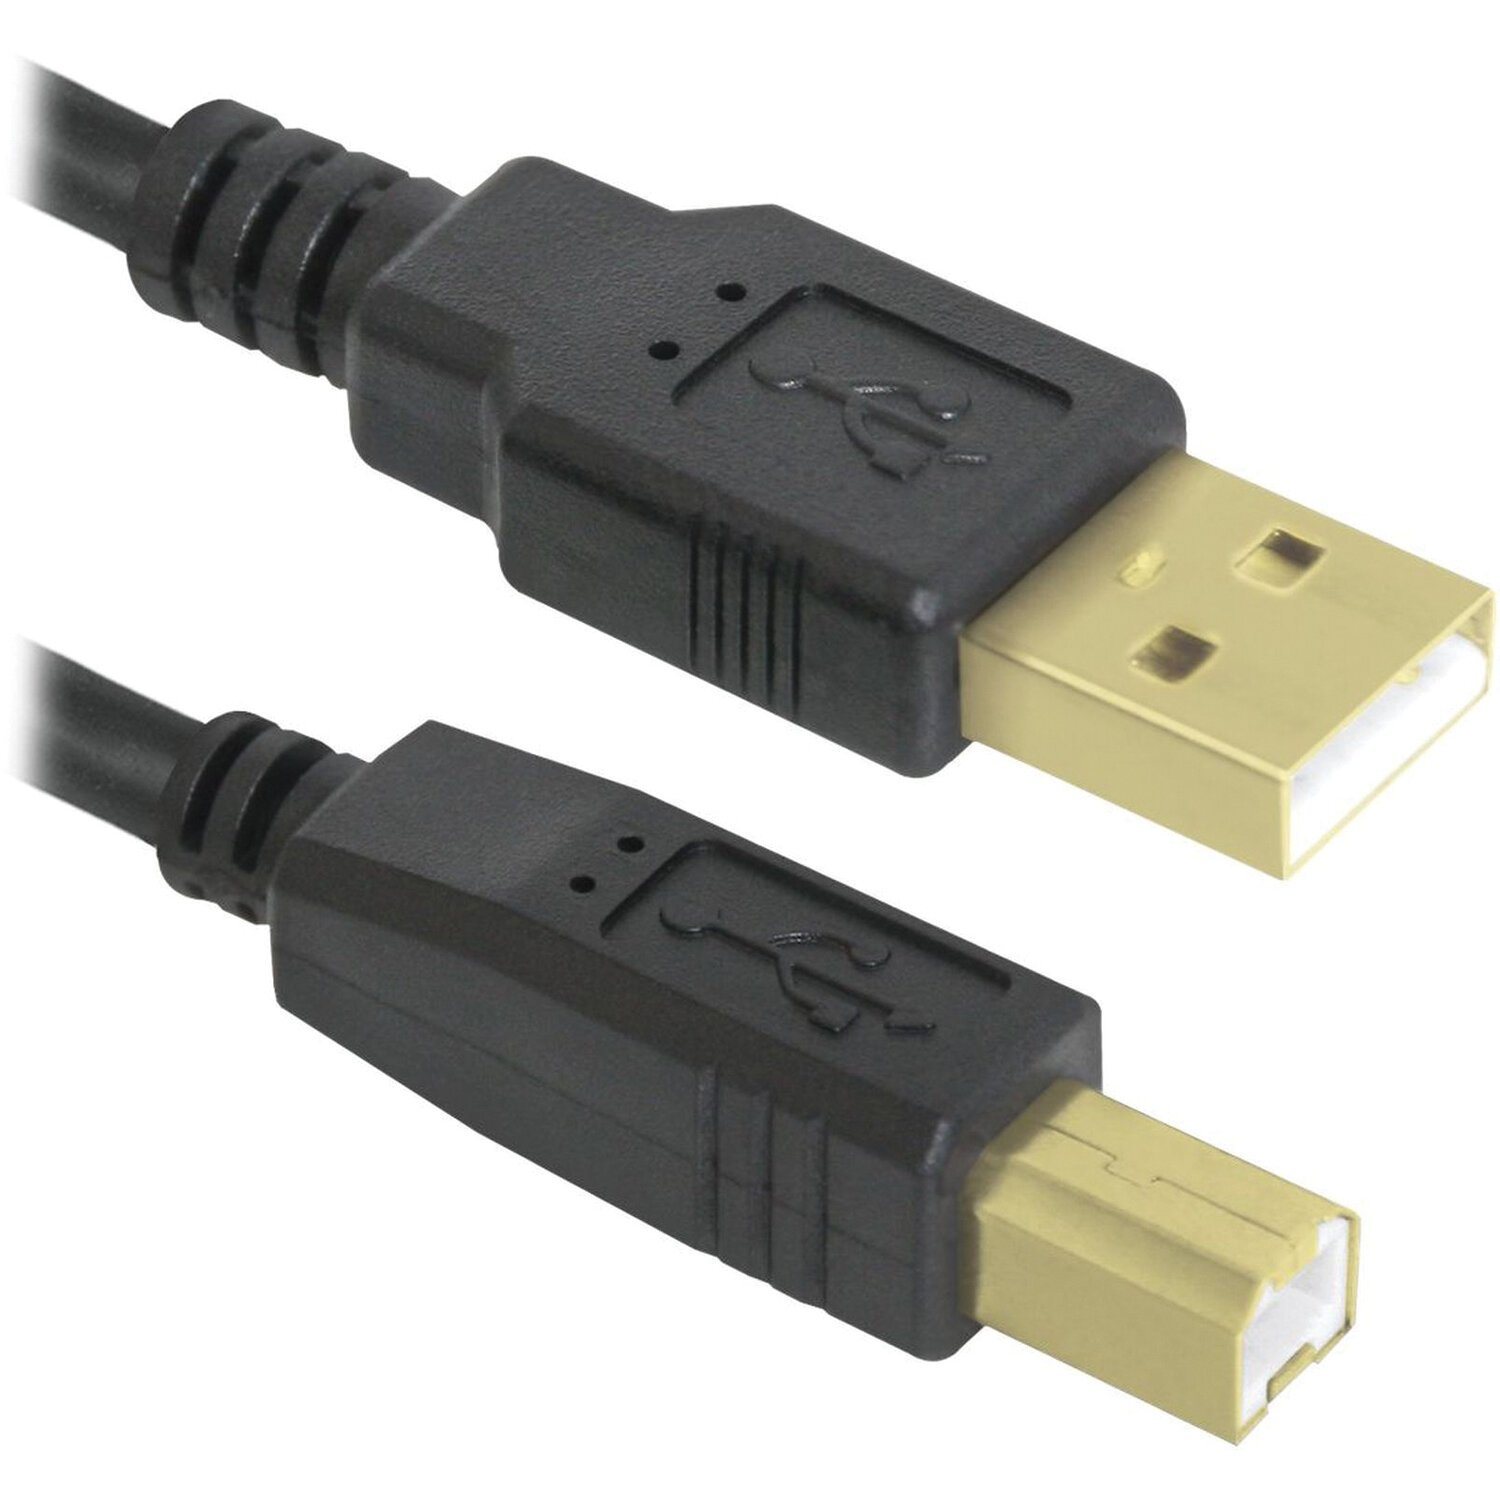  USB 2.0 AM-BM, 3 . DEFENDER 87431